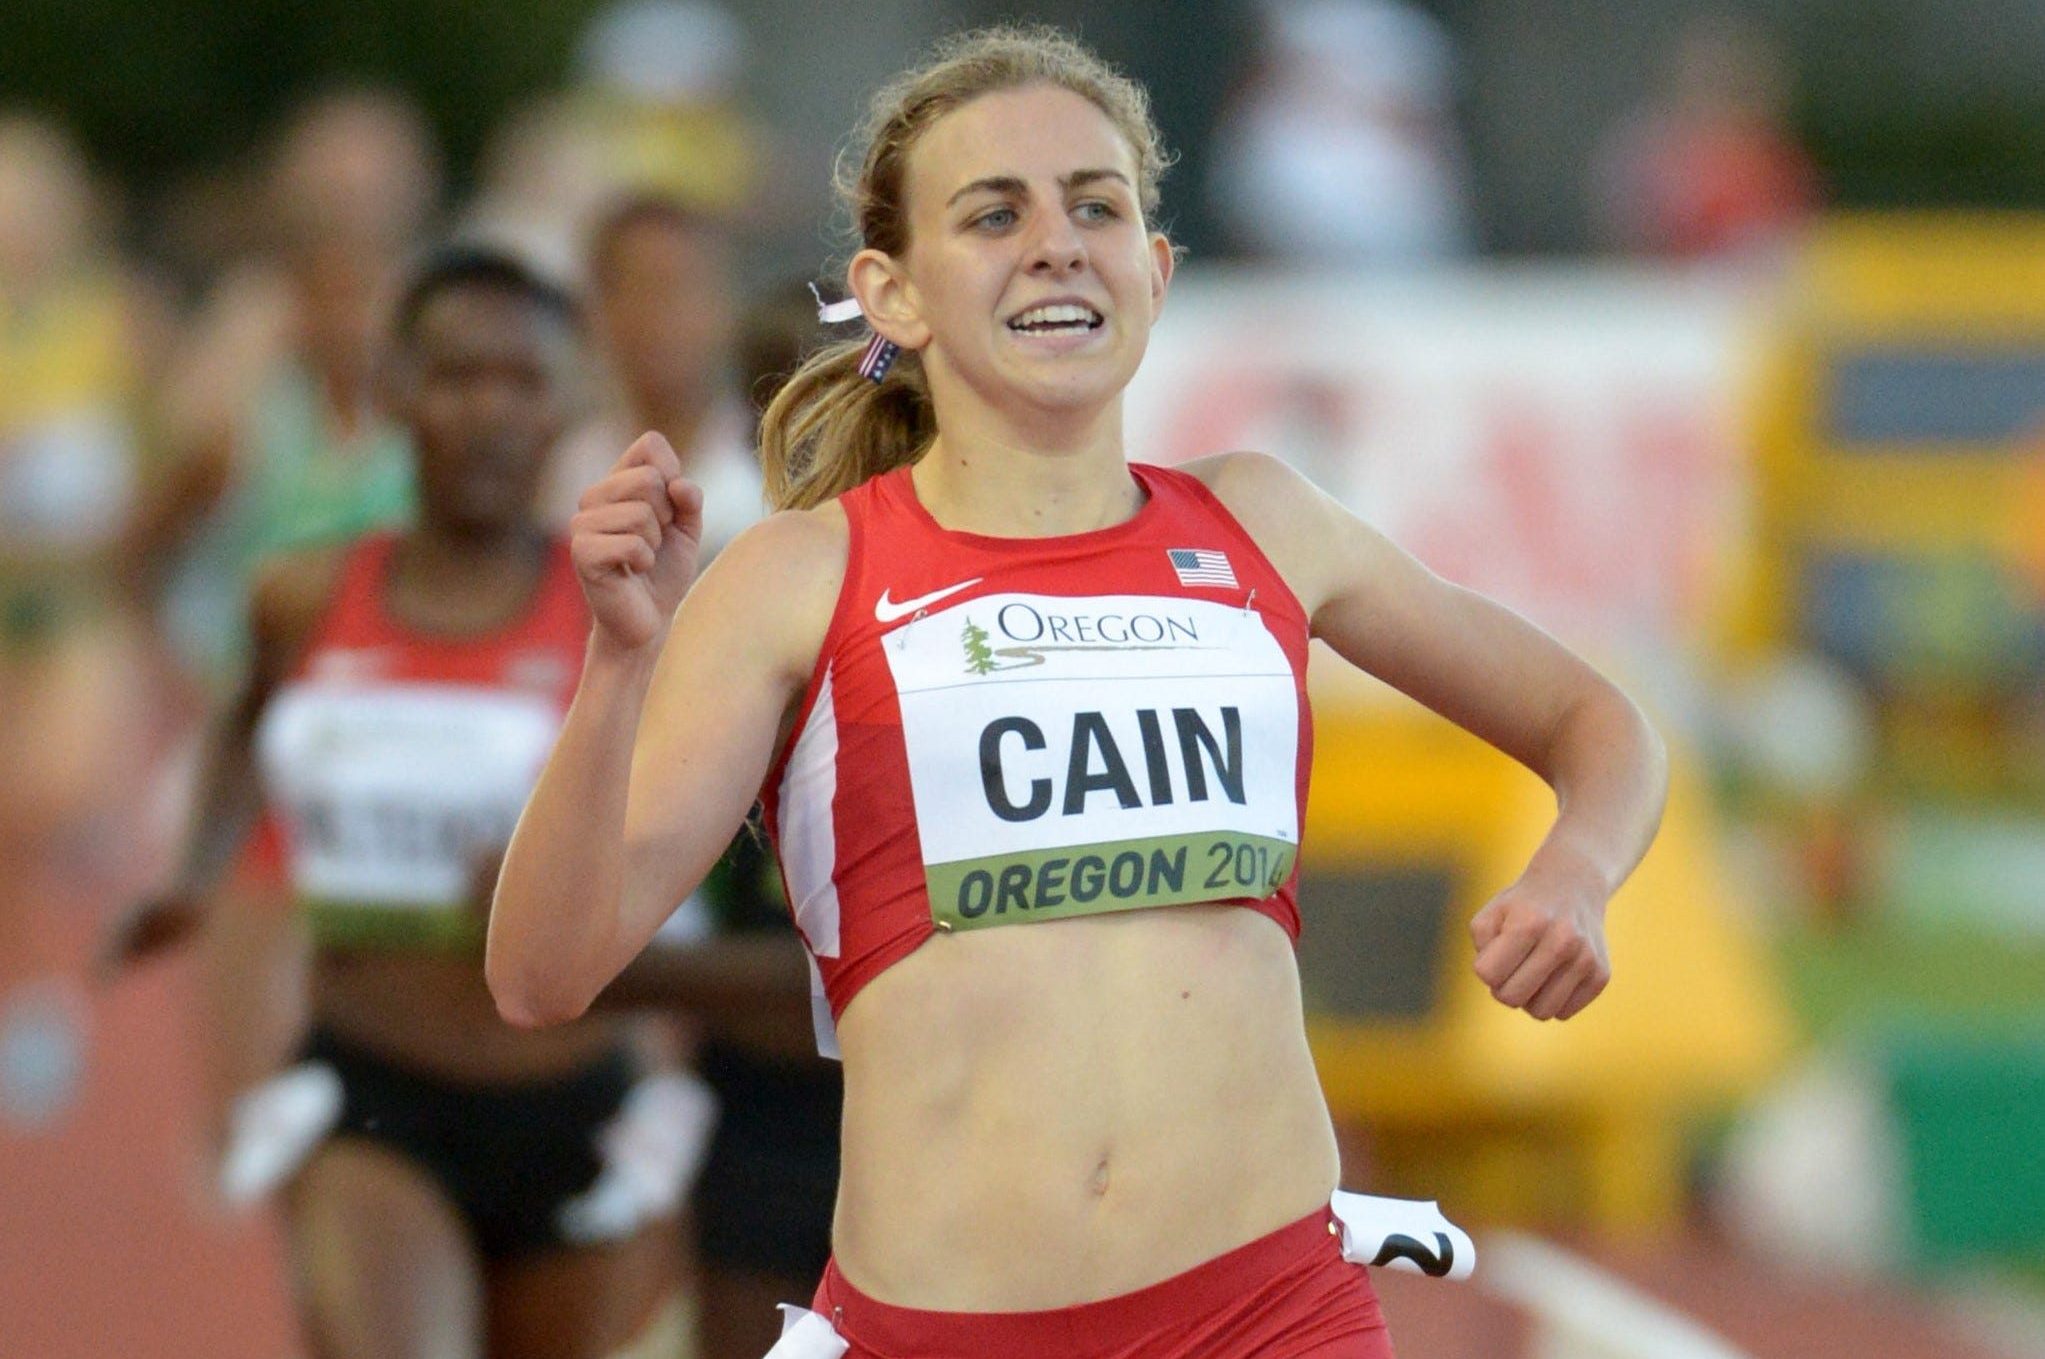 Nike Runner, Mary Cain, Claims 